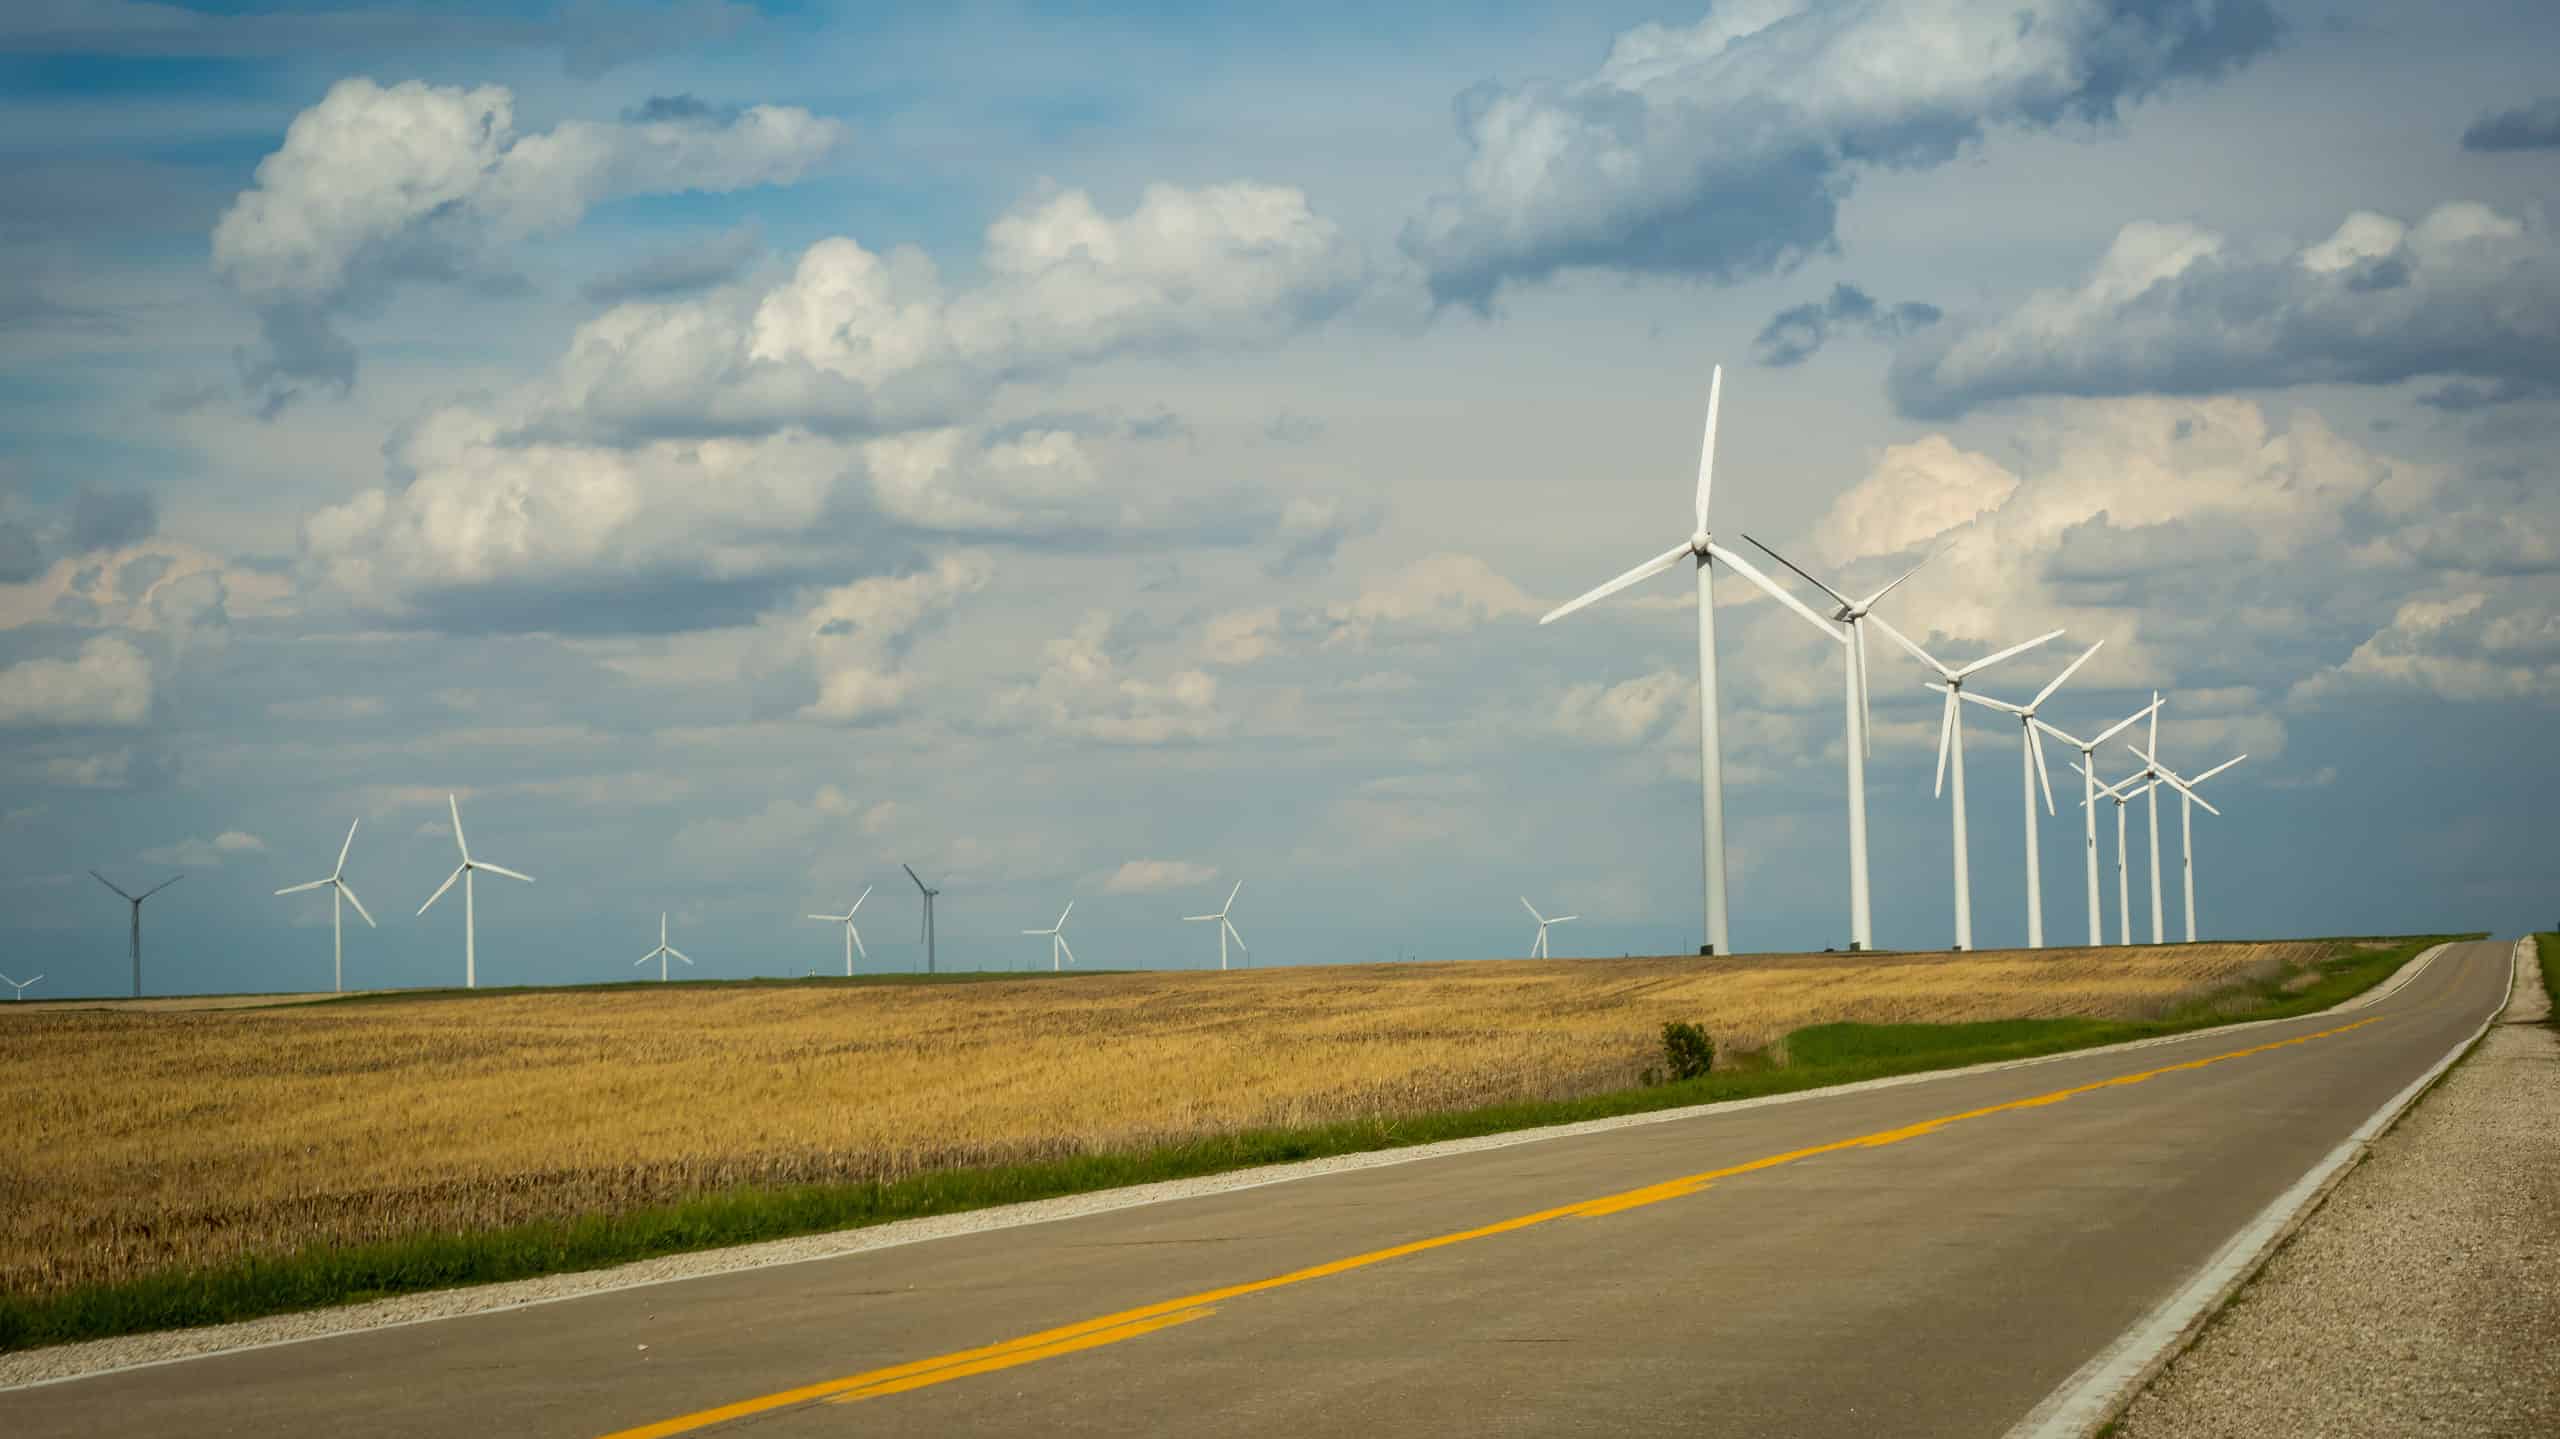 Wind turbines on a farm in Iowa on a cloudy day